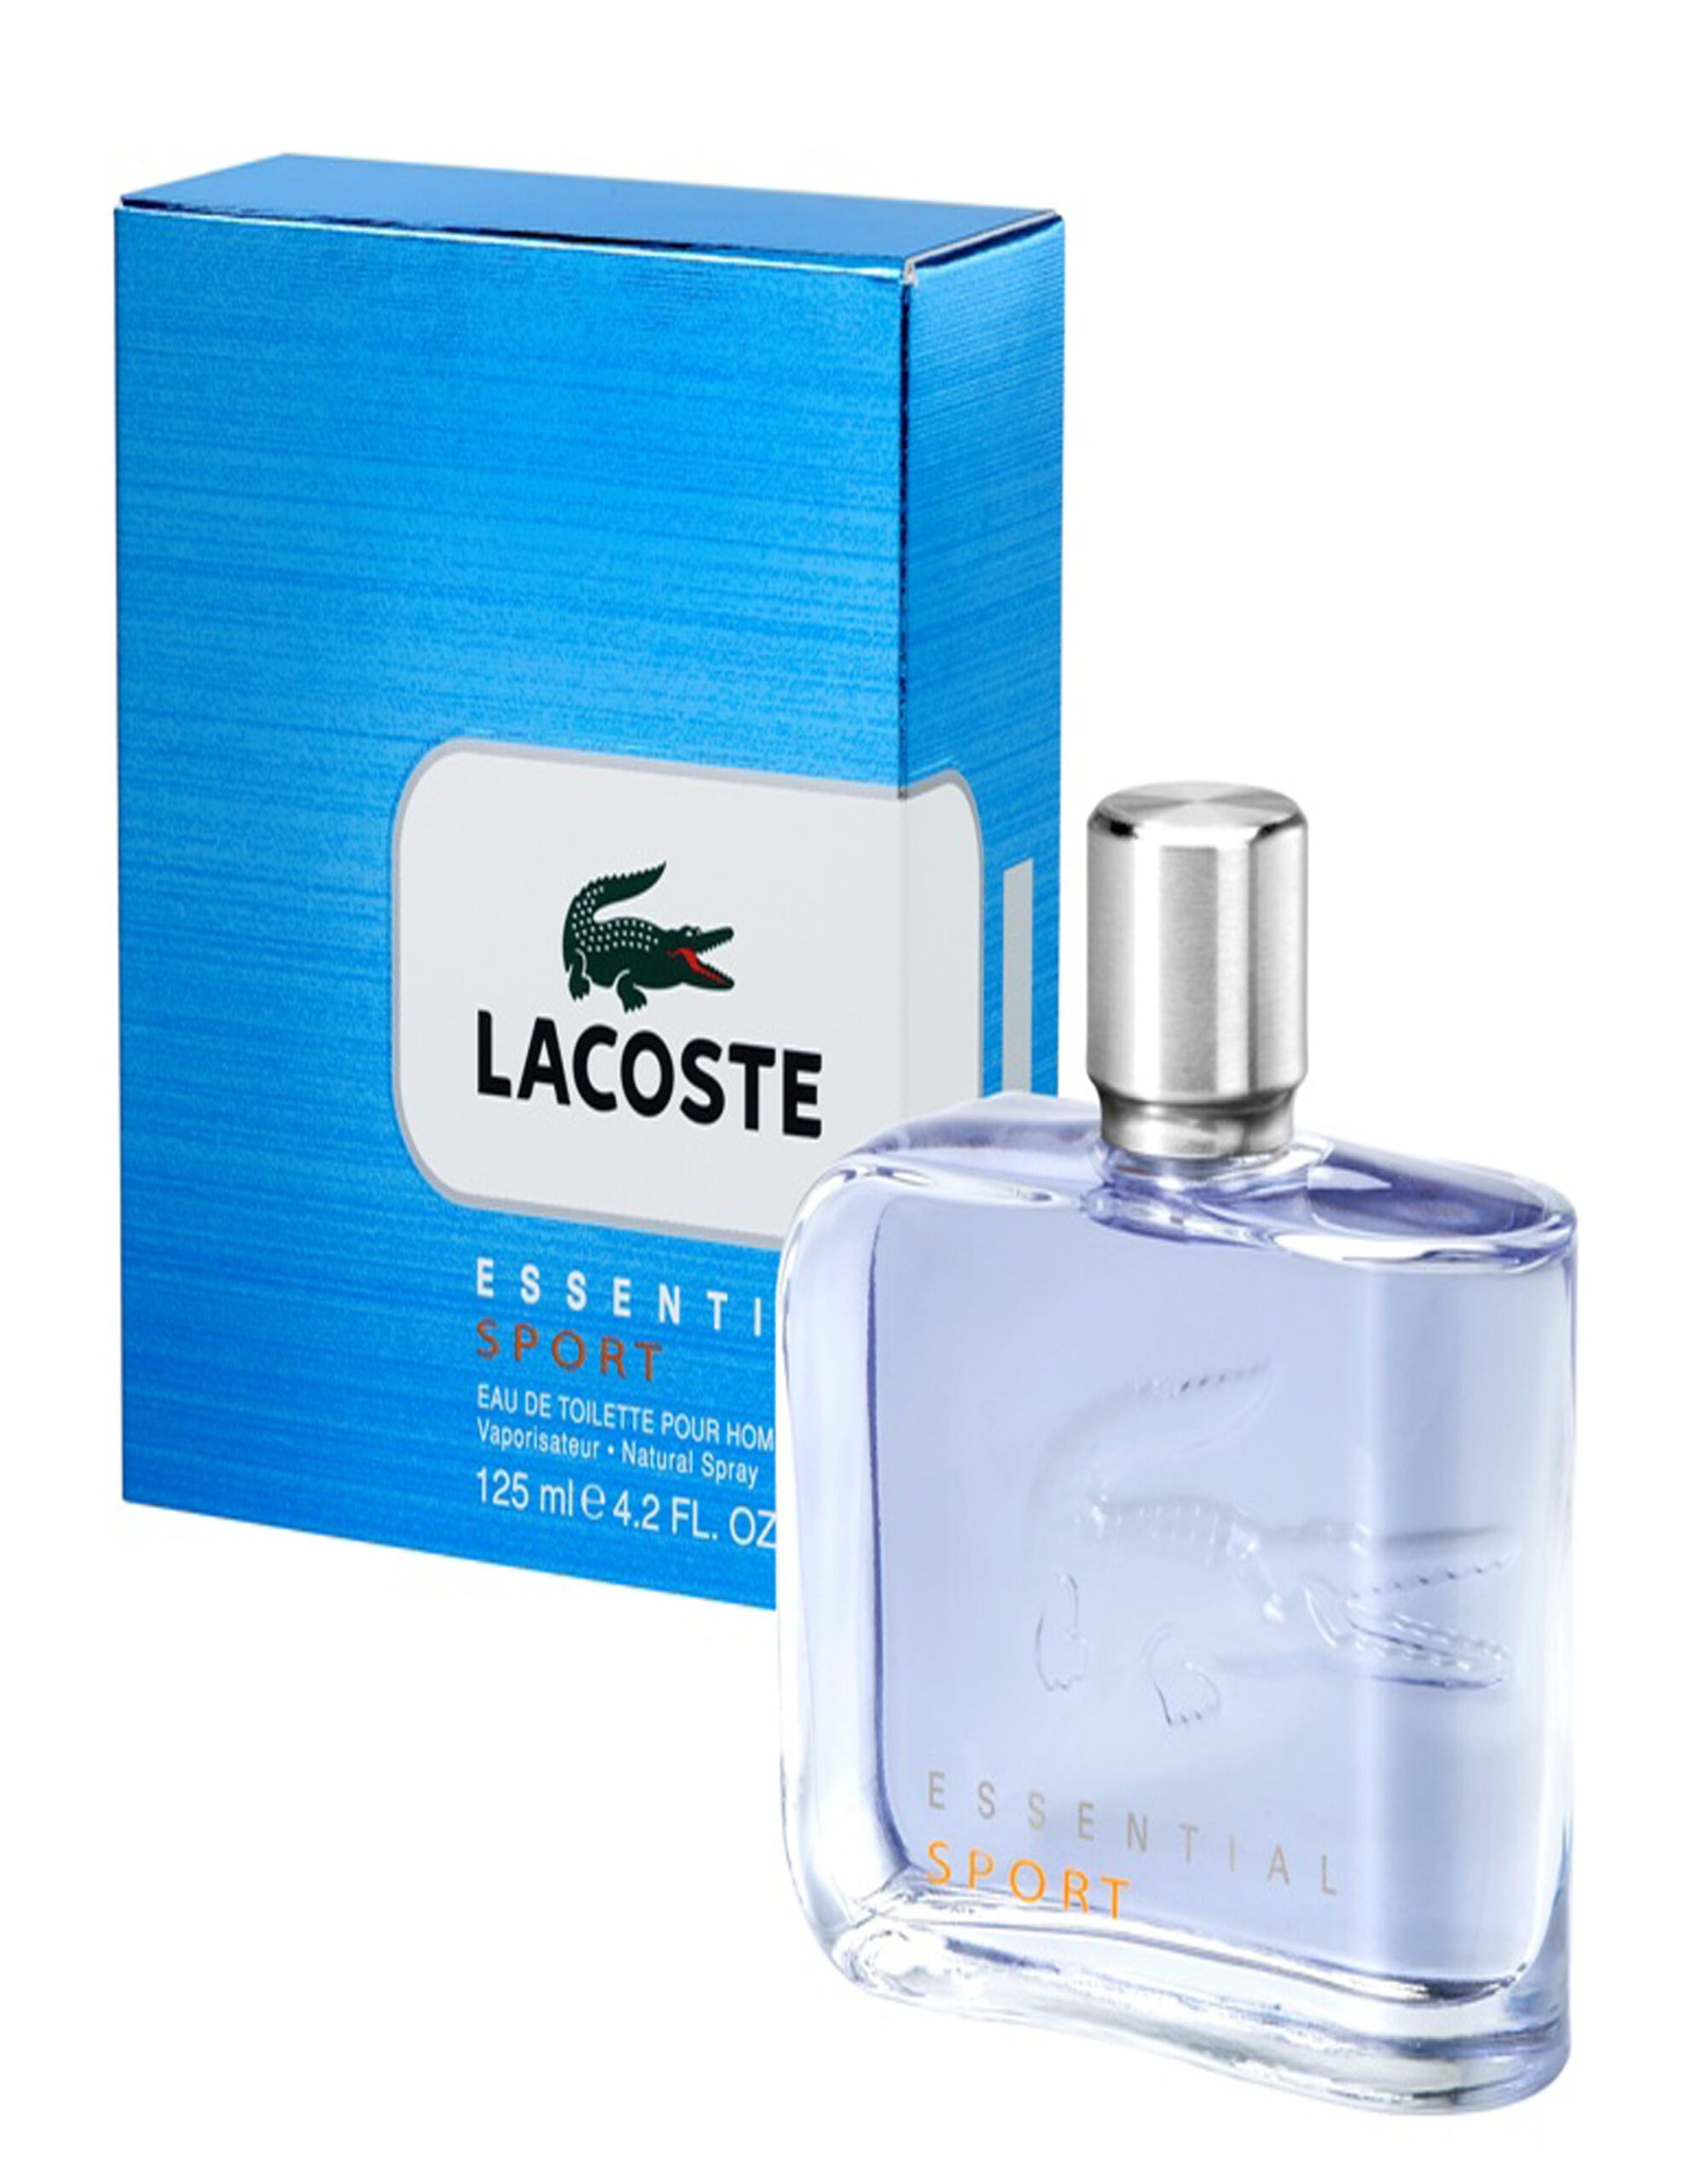 Wallpaper Lacoste Sport, Mens Perfume, Fragrance, Lacoste Wallpaper, Other